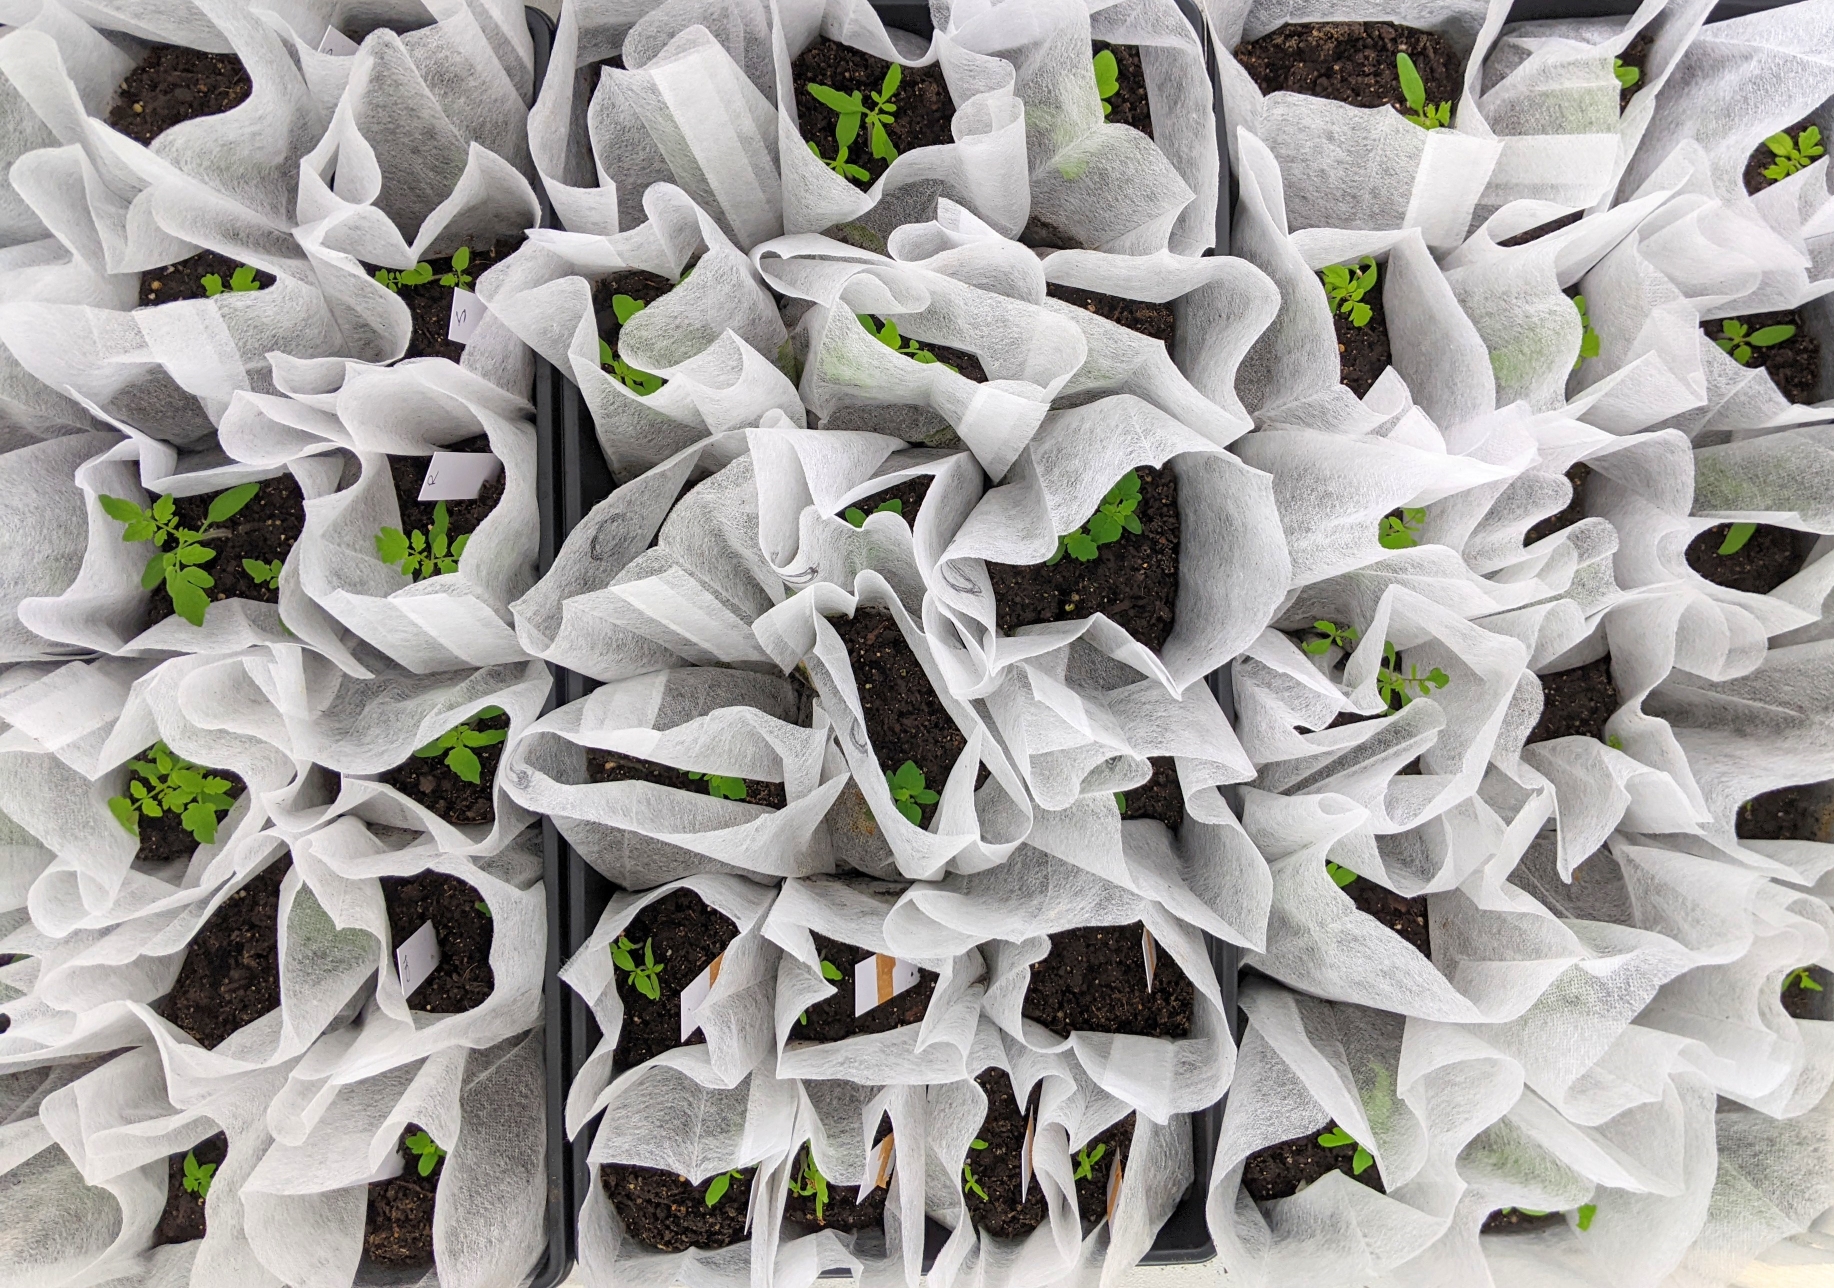 Tomato seedlings in `biodegradable white bags